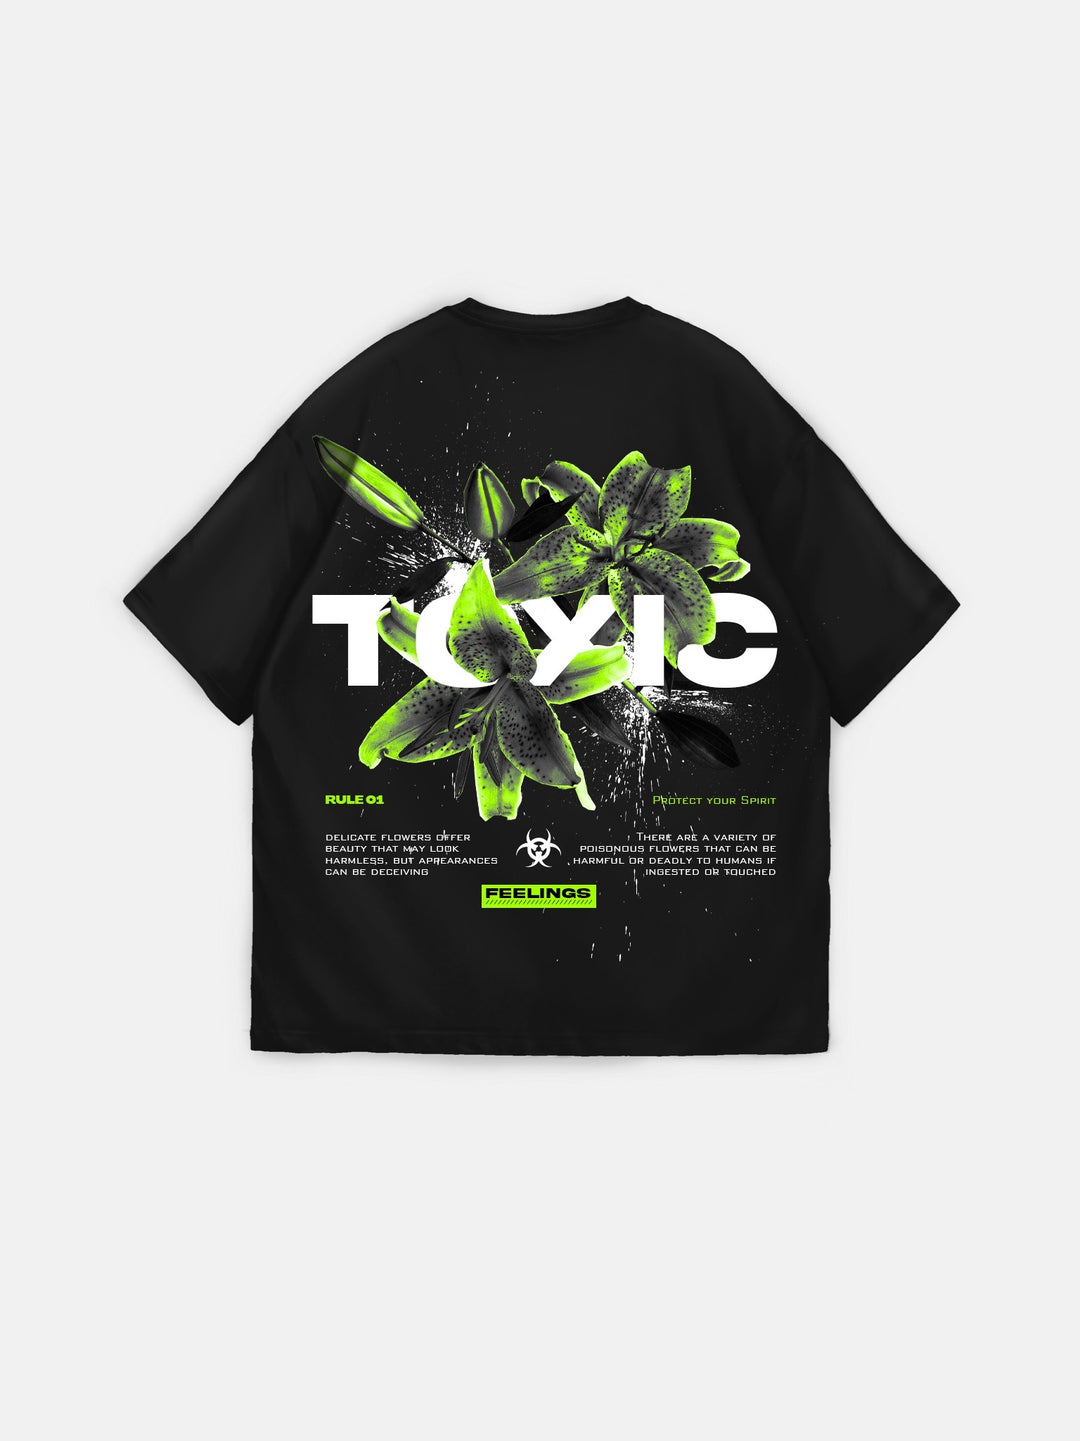 Oversize Toxic T-shirt - Black